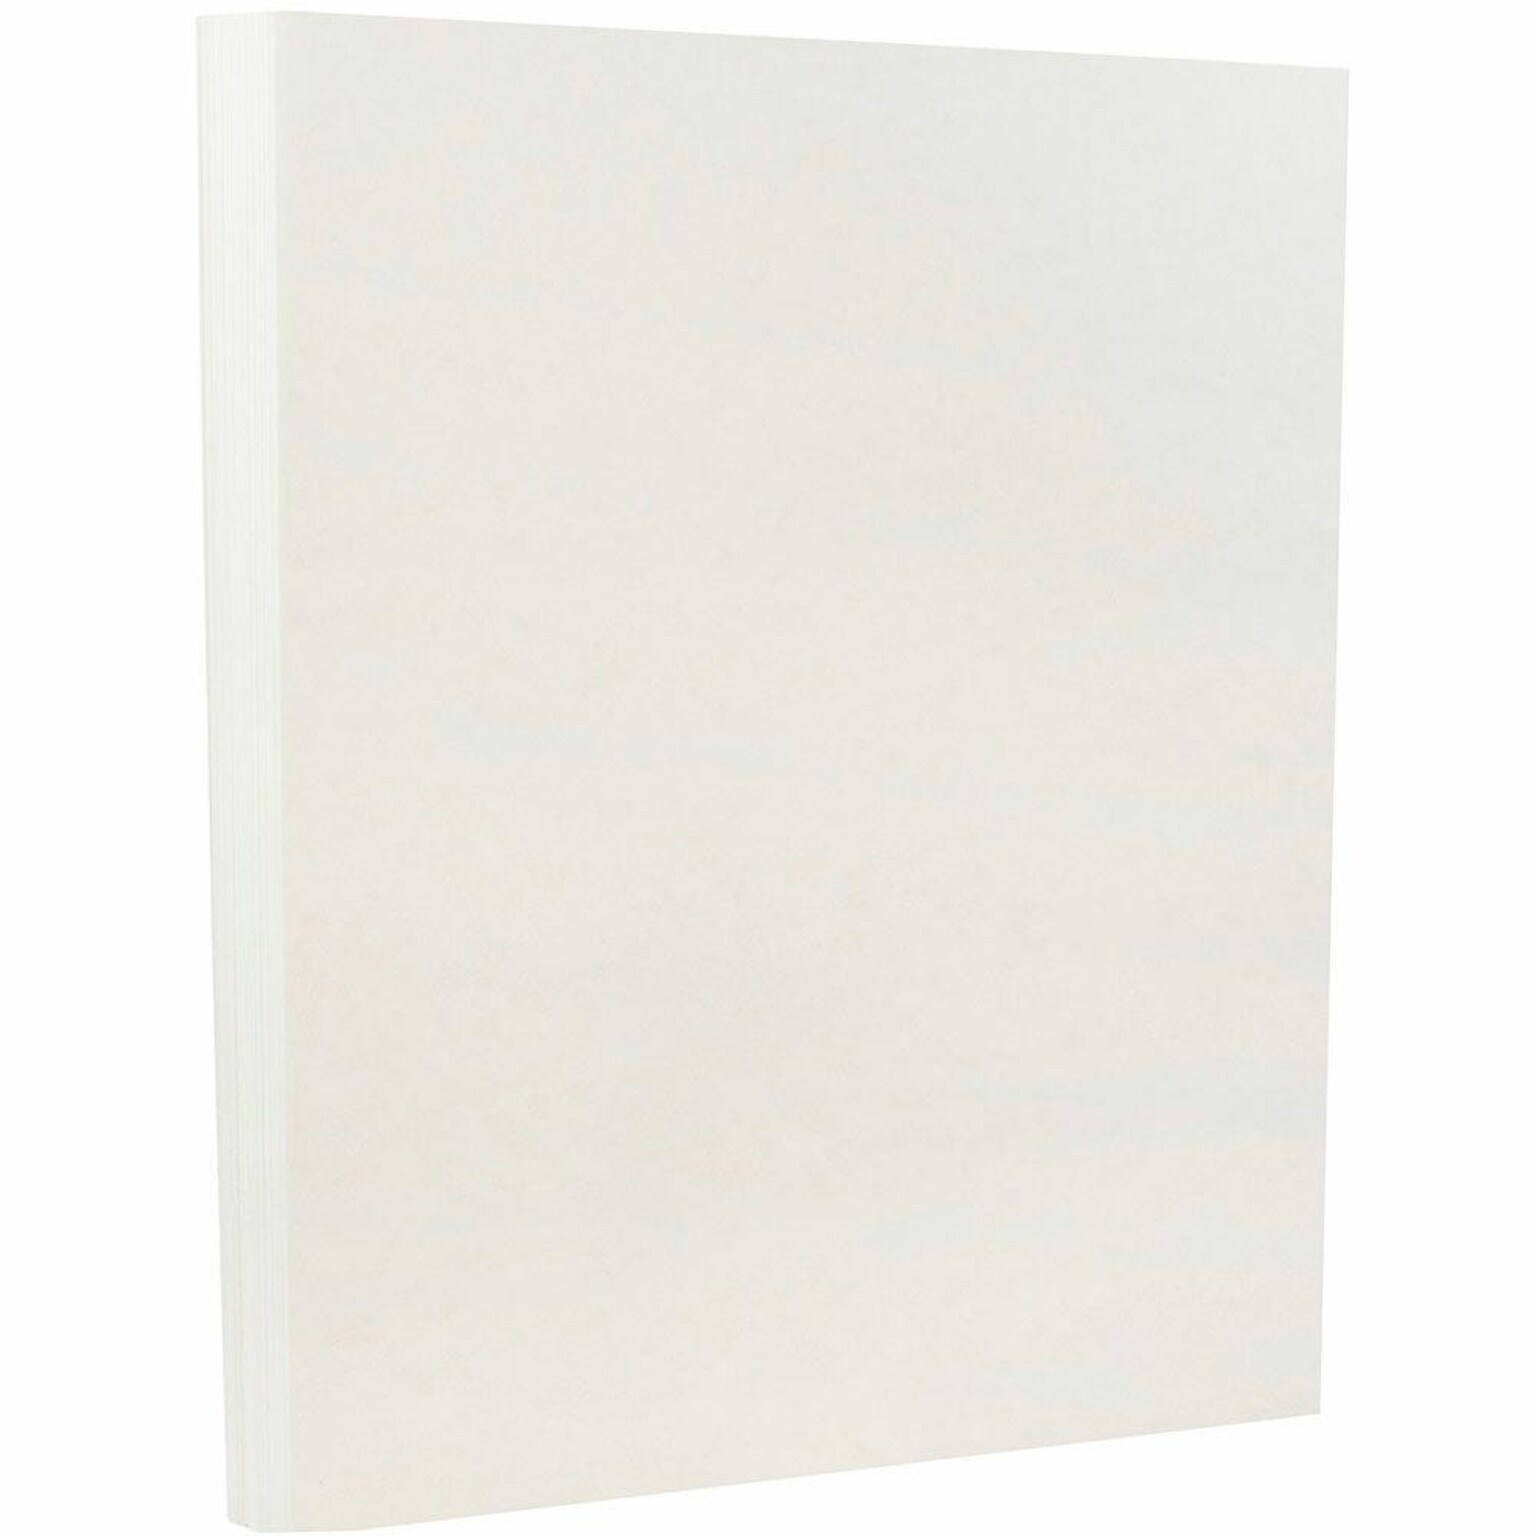 JAM PAPER 8.5 x 11 Parchment Cardstock, 65lb, White, 100 Sheets/Pack (171114G)